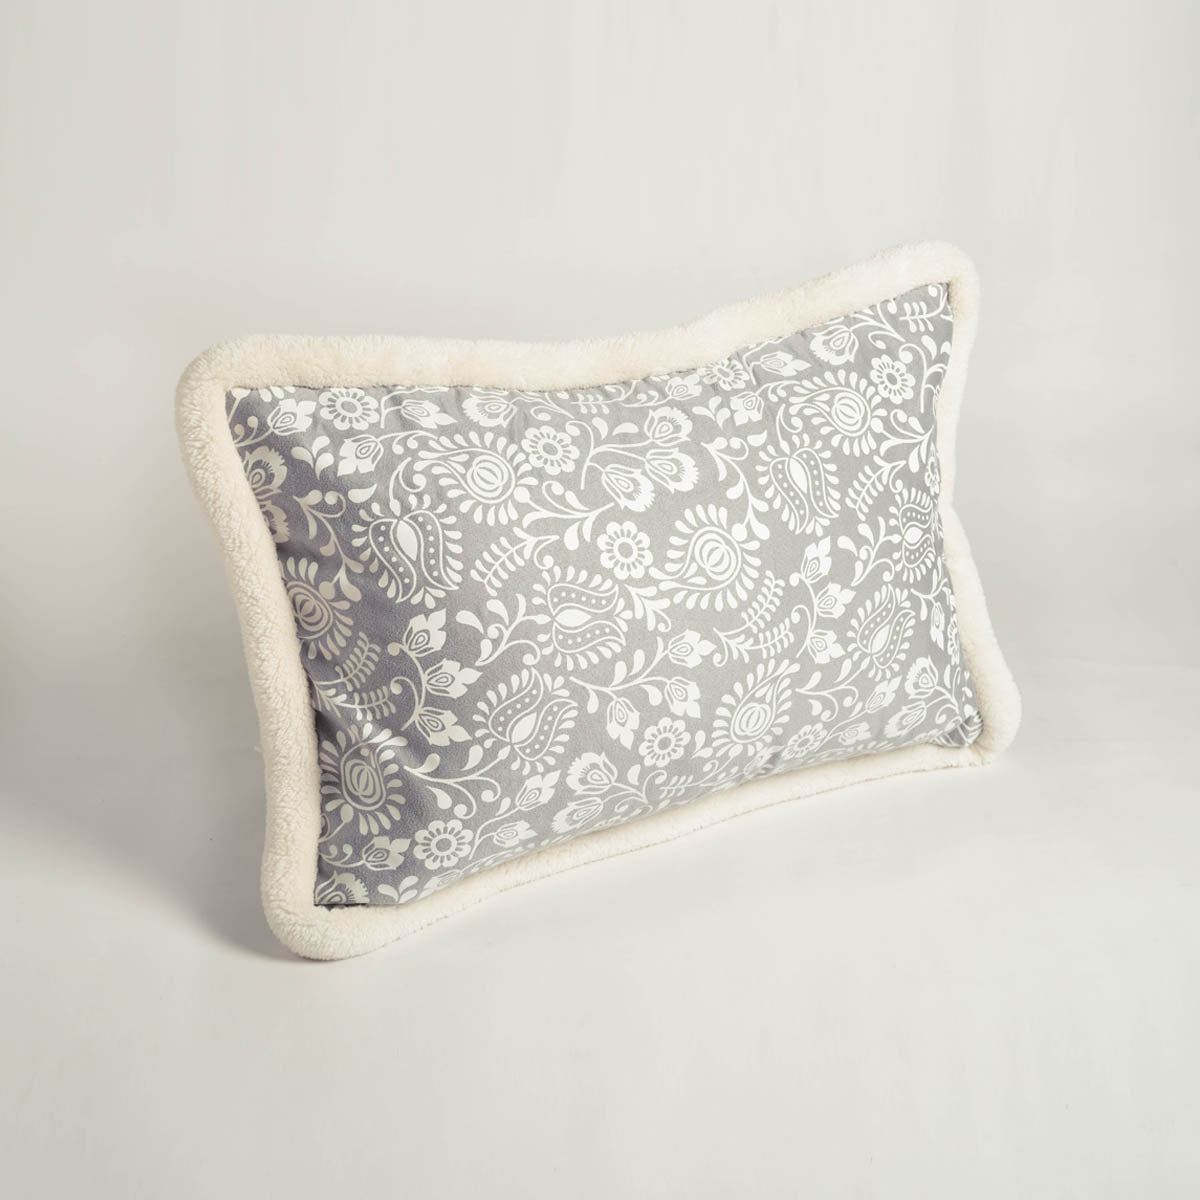 Svenska - Grey printed cushion cover, nordic style pillow cover, Scandinavian pillow